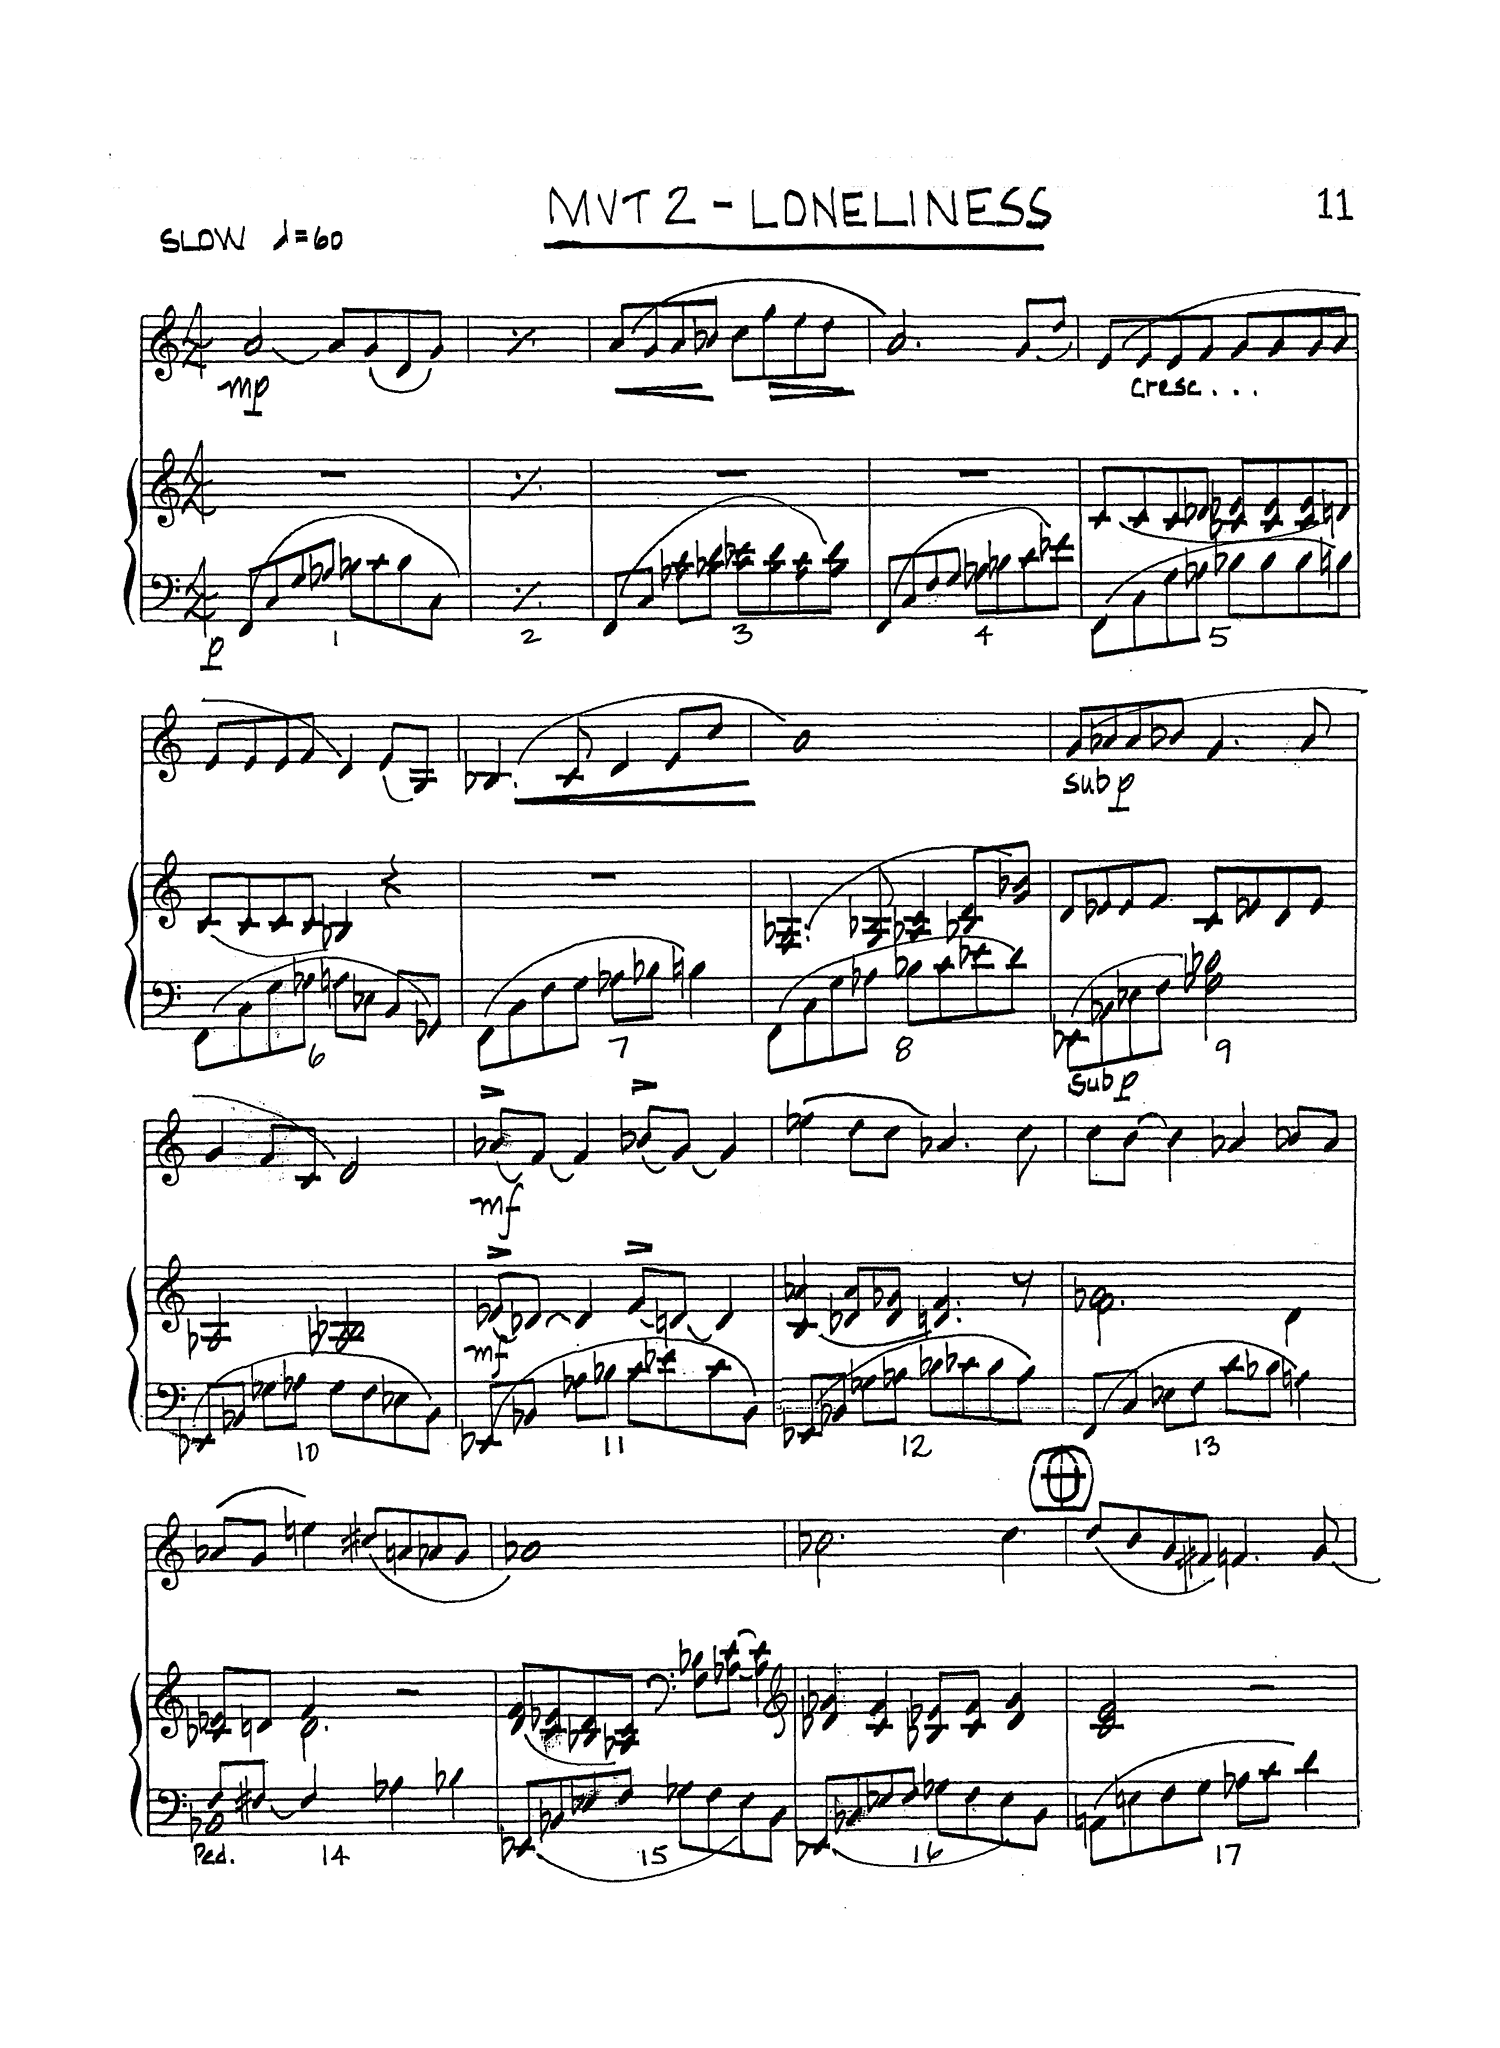 Baker Clarinet Sonata - Movement 2